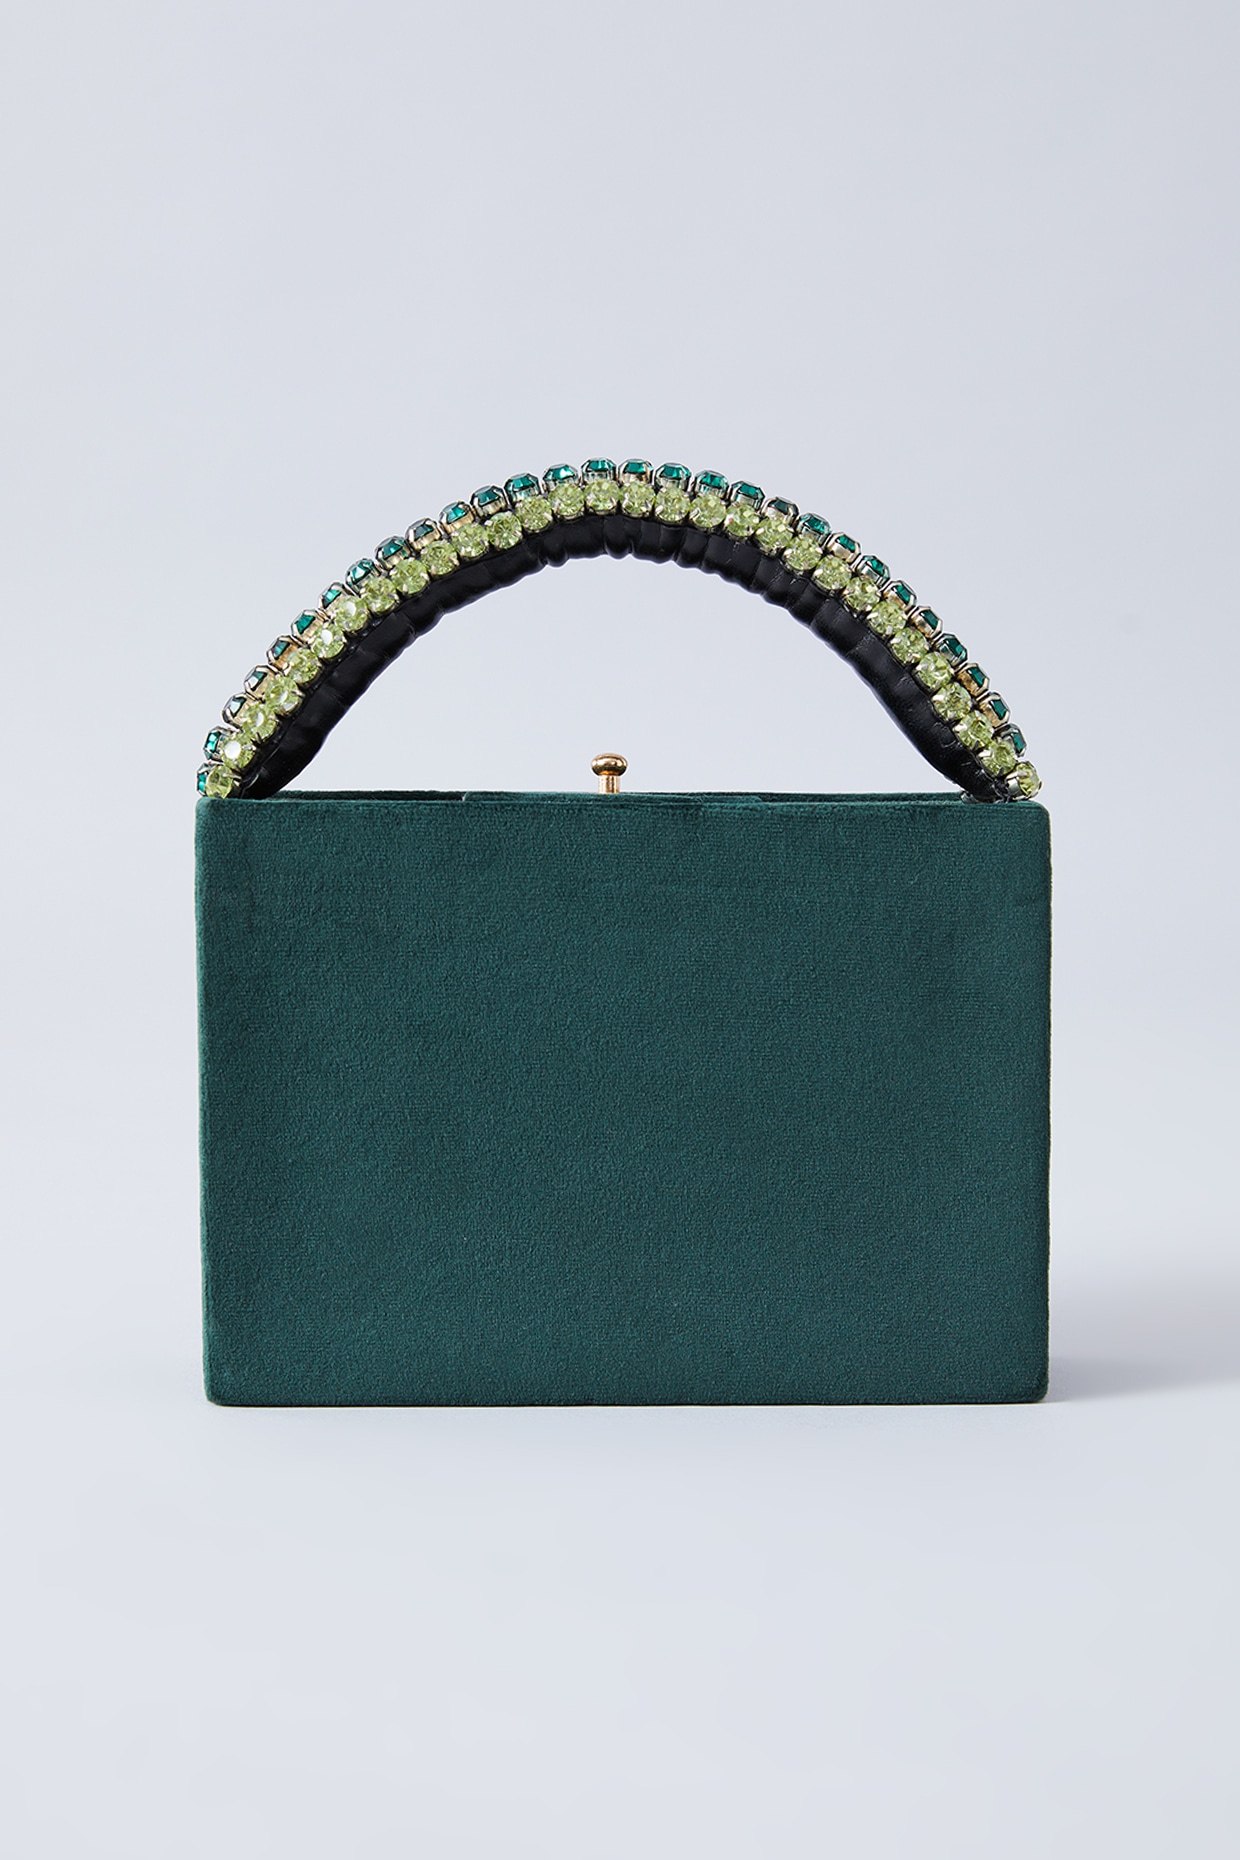 Rubans Green Colour Handbag With Embroided Green Stone Design.